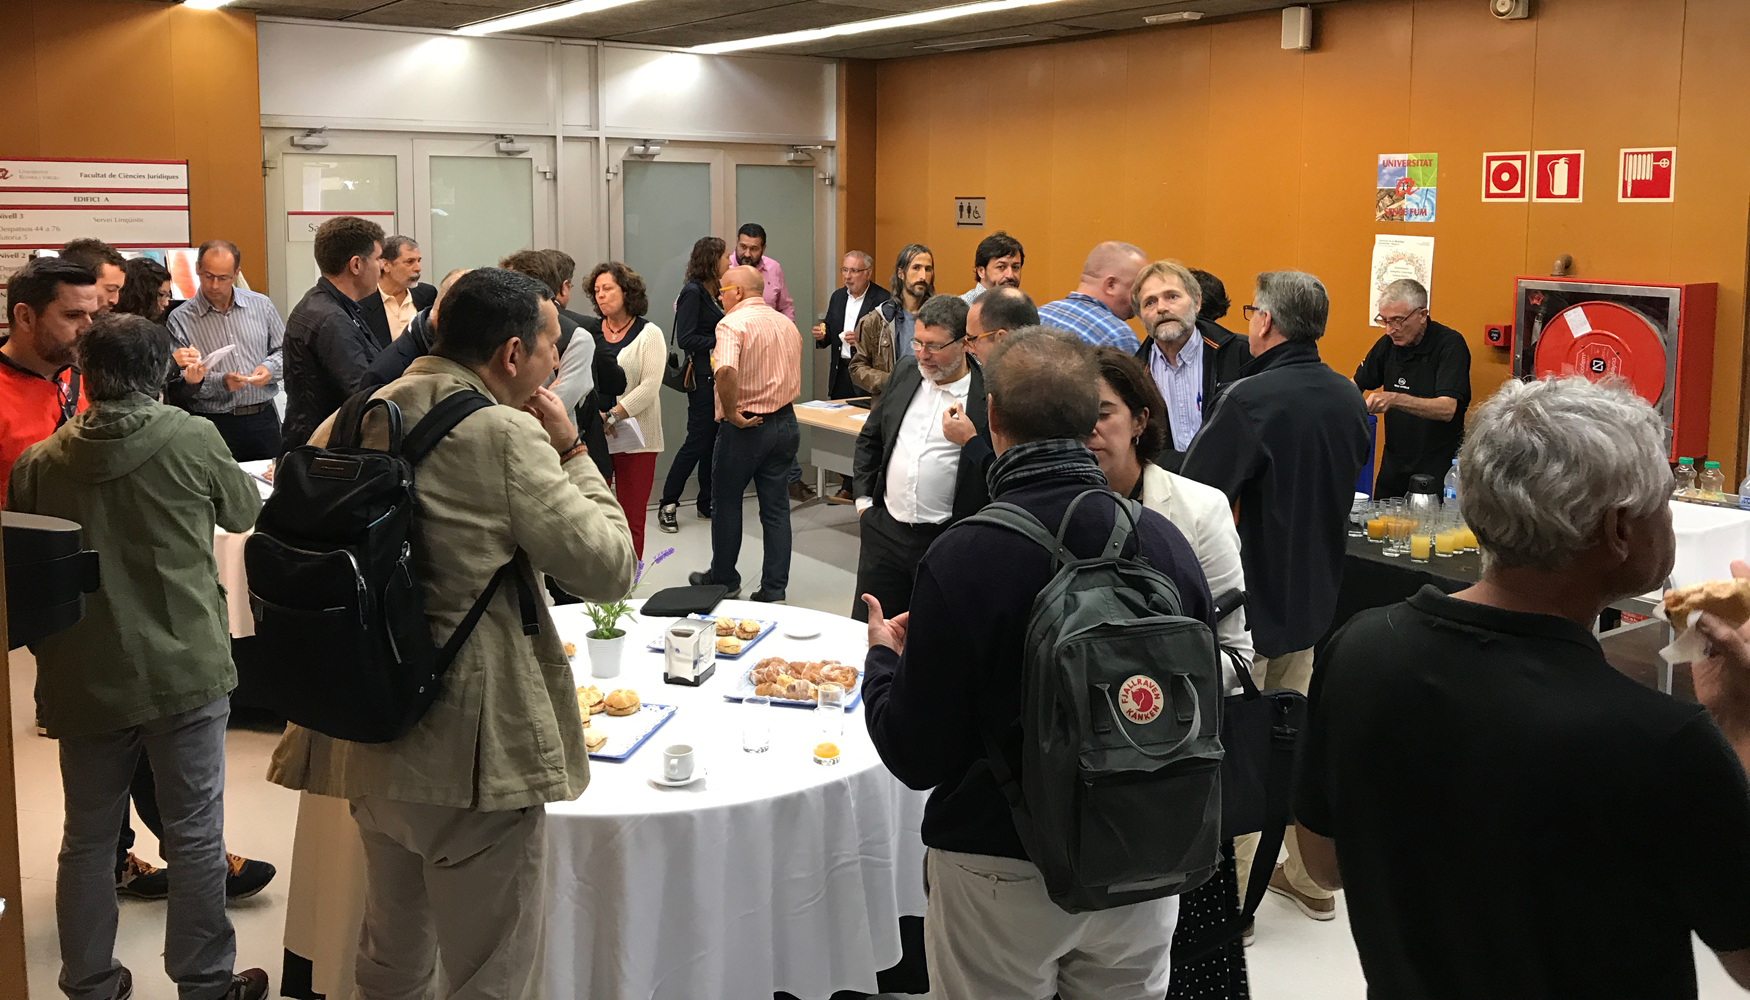 Caf - networking de la la 7 Conferencia BioEconomic Tarragona Smart City